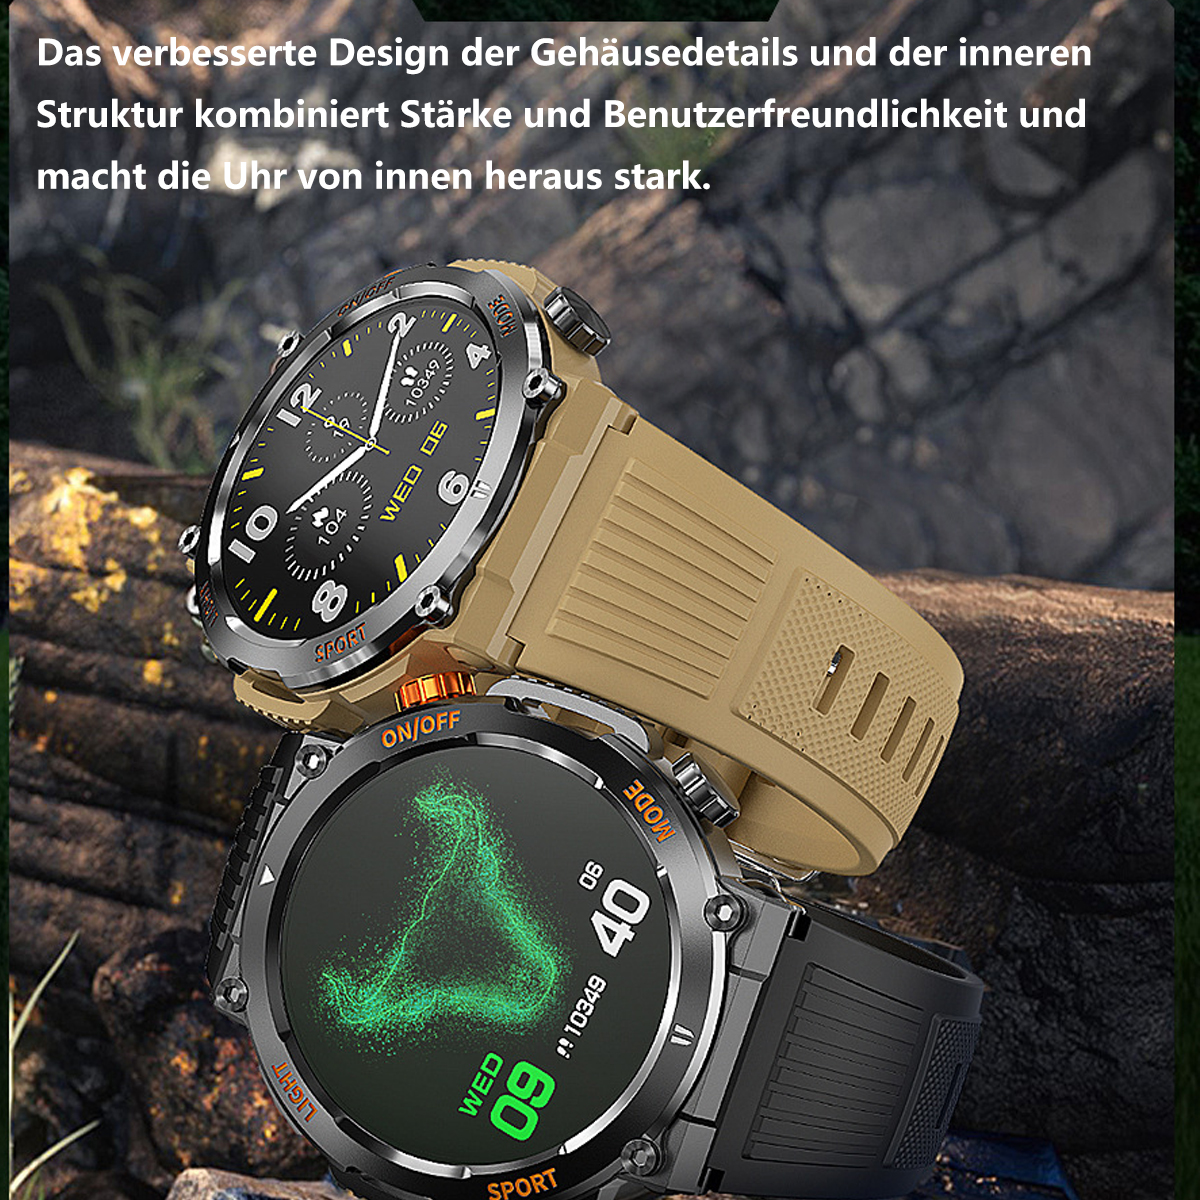 ENBAOXIN Smart Uhr Silikon sprechende Blutdruckmessgerät Silikon Silikon, Watch Orange Smartwatch LED Bluetooth Herzfrequenz beleuchtet Kompass